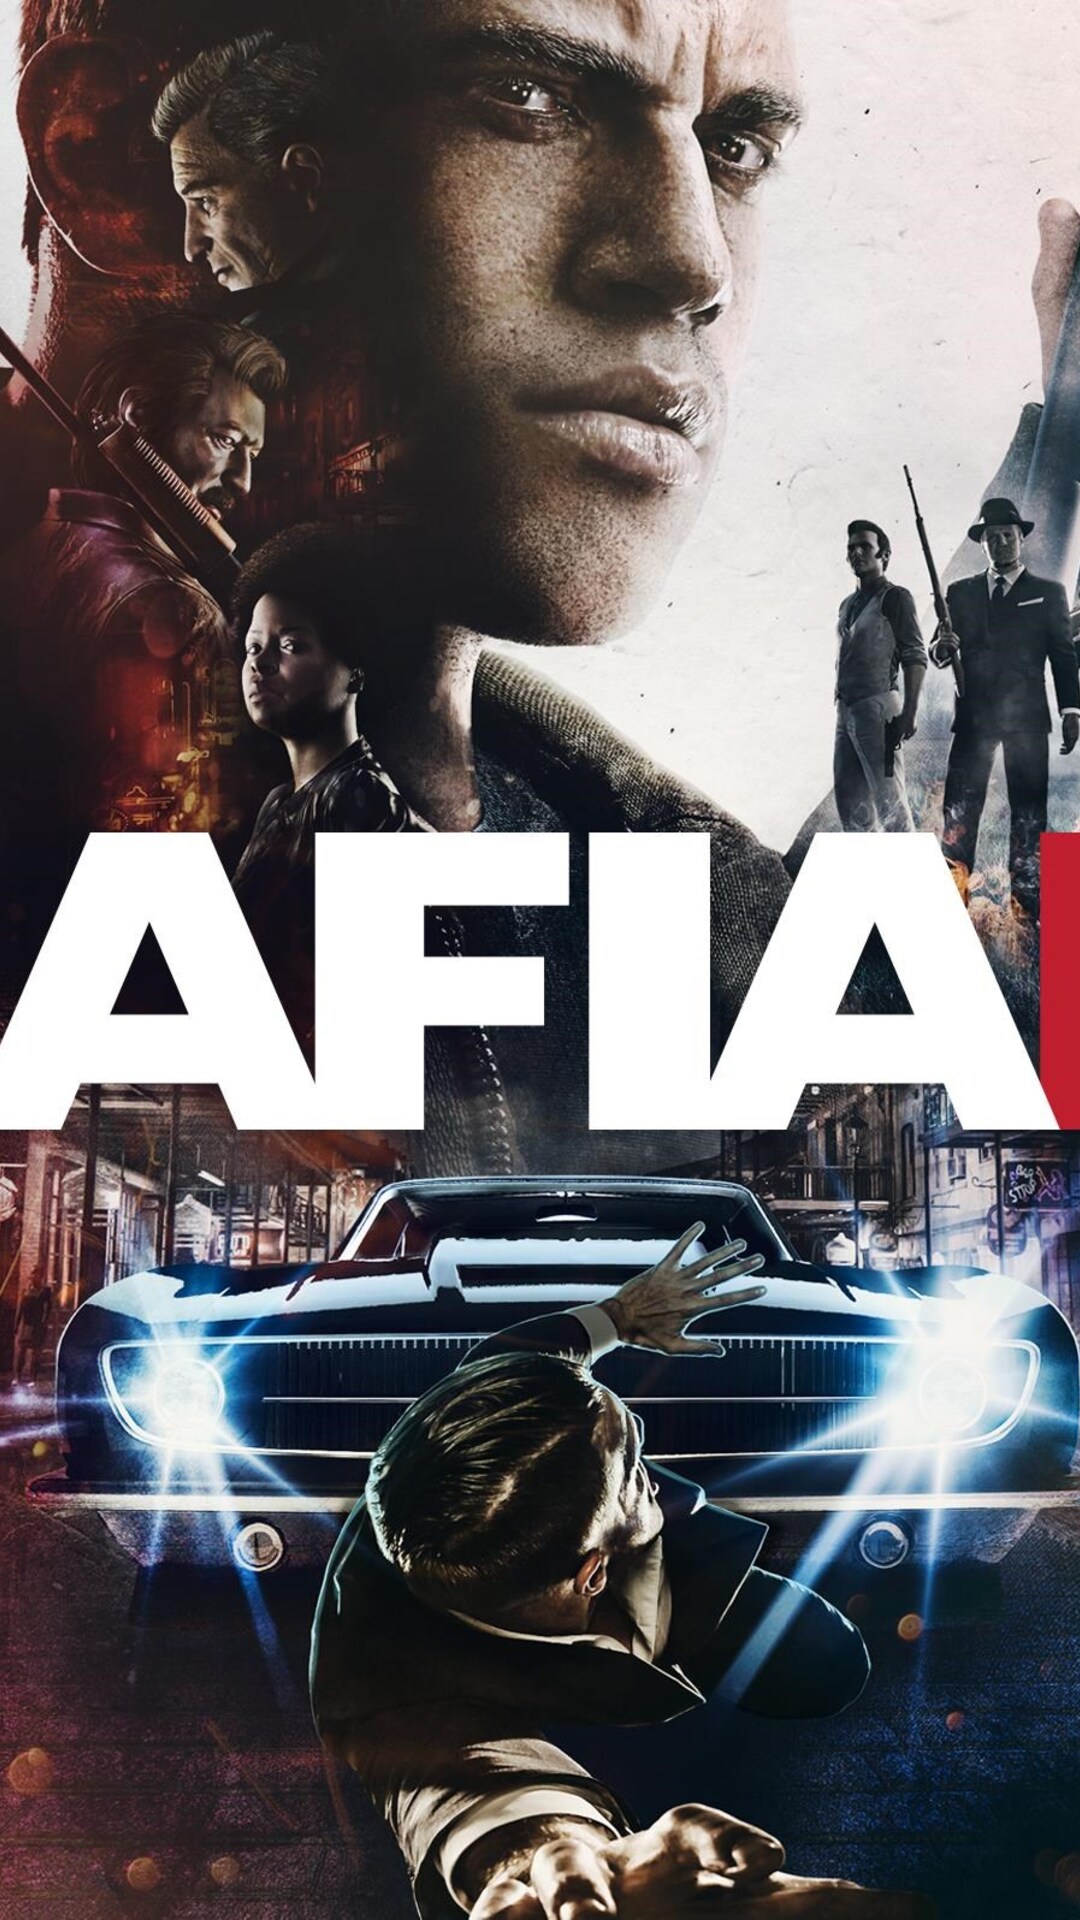 mafia-3-2016-game-image.jpg